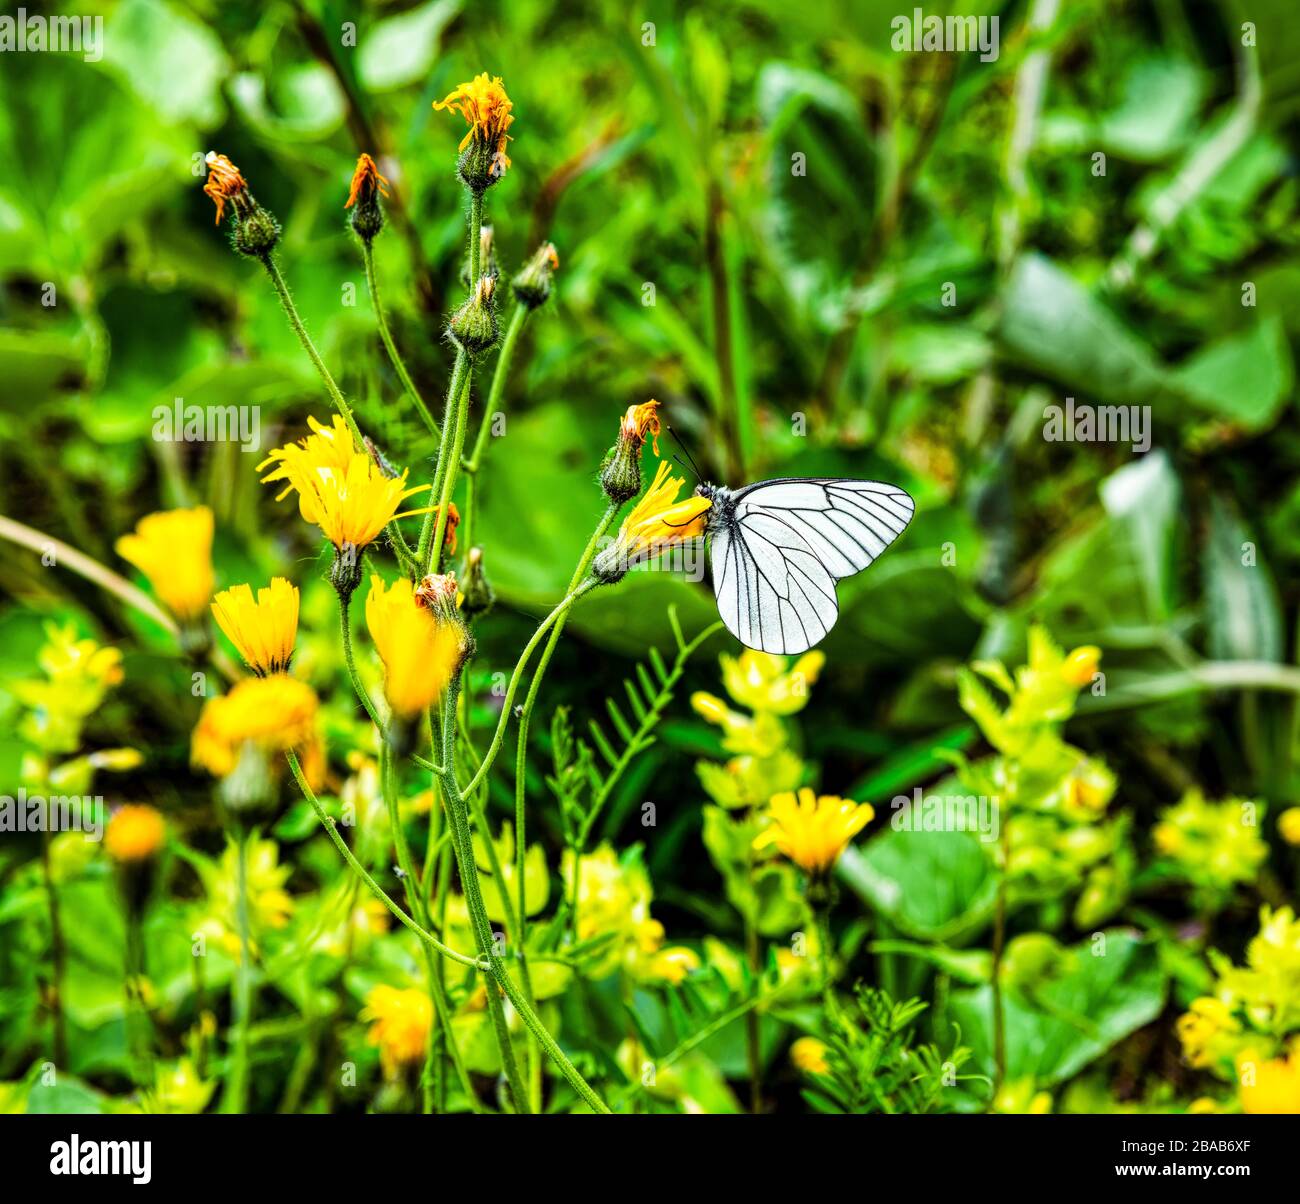 Black veined white butterfly on flower head, Tyrol, Austria Stock Photo